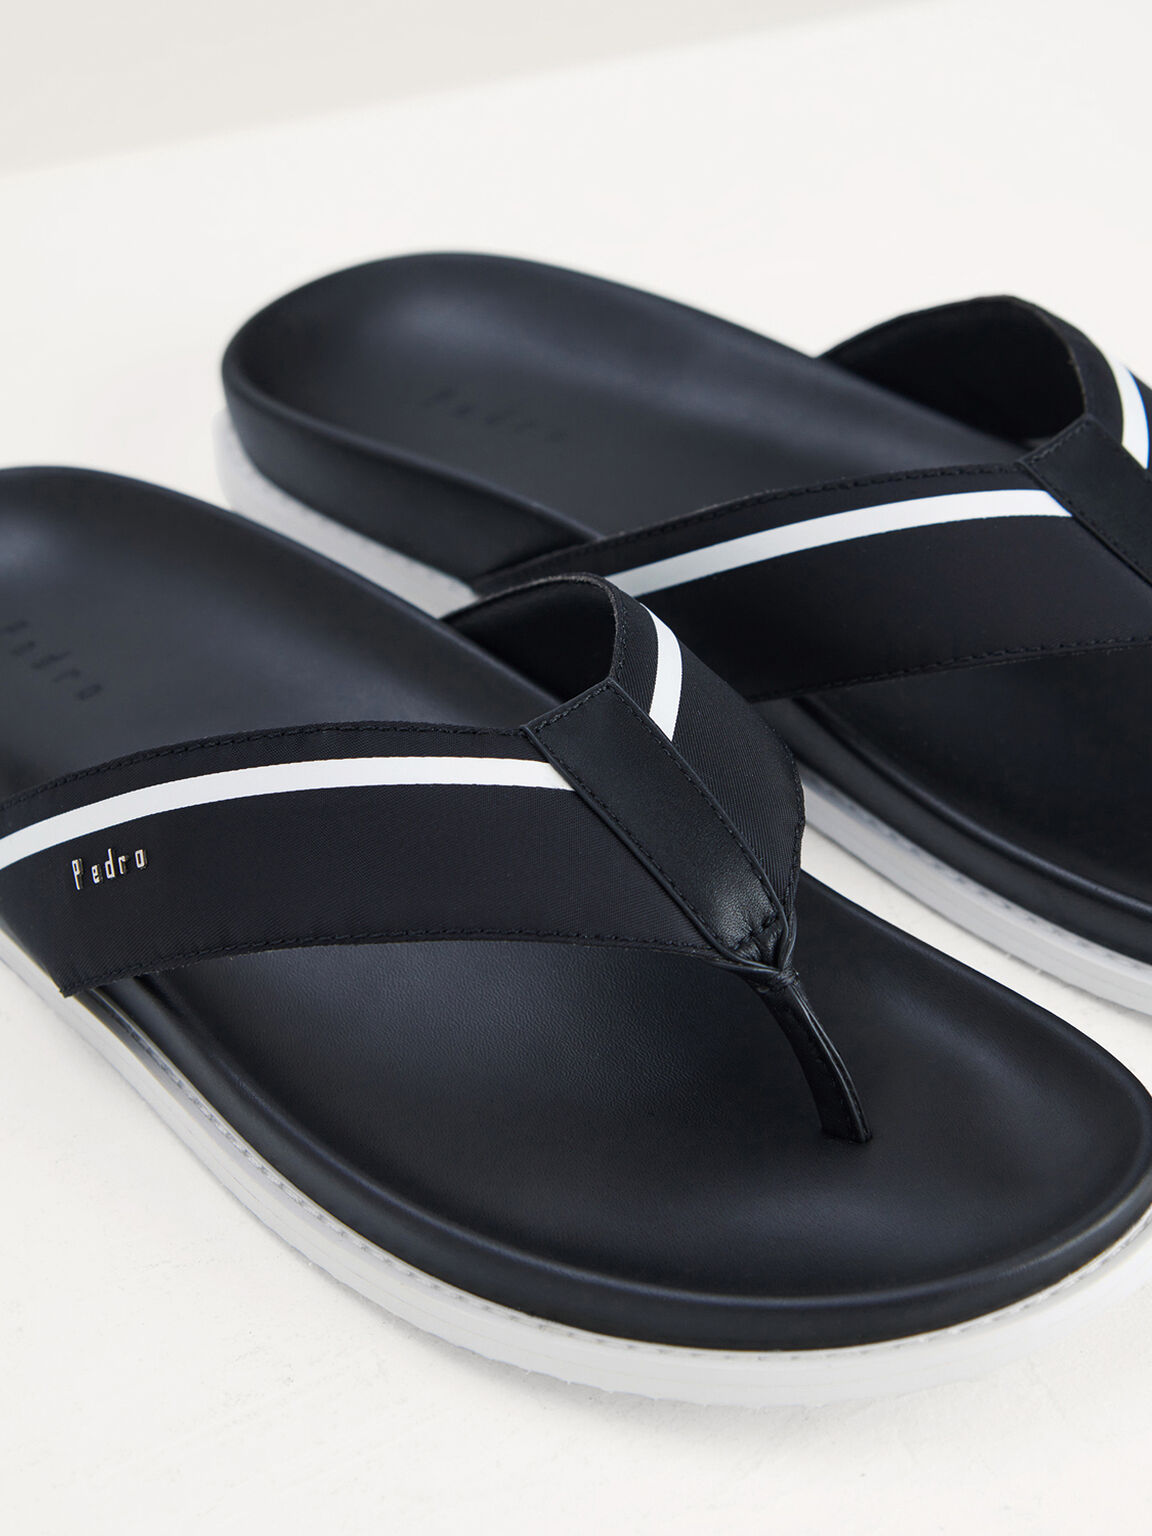 Nylon Thong Sandals, Black